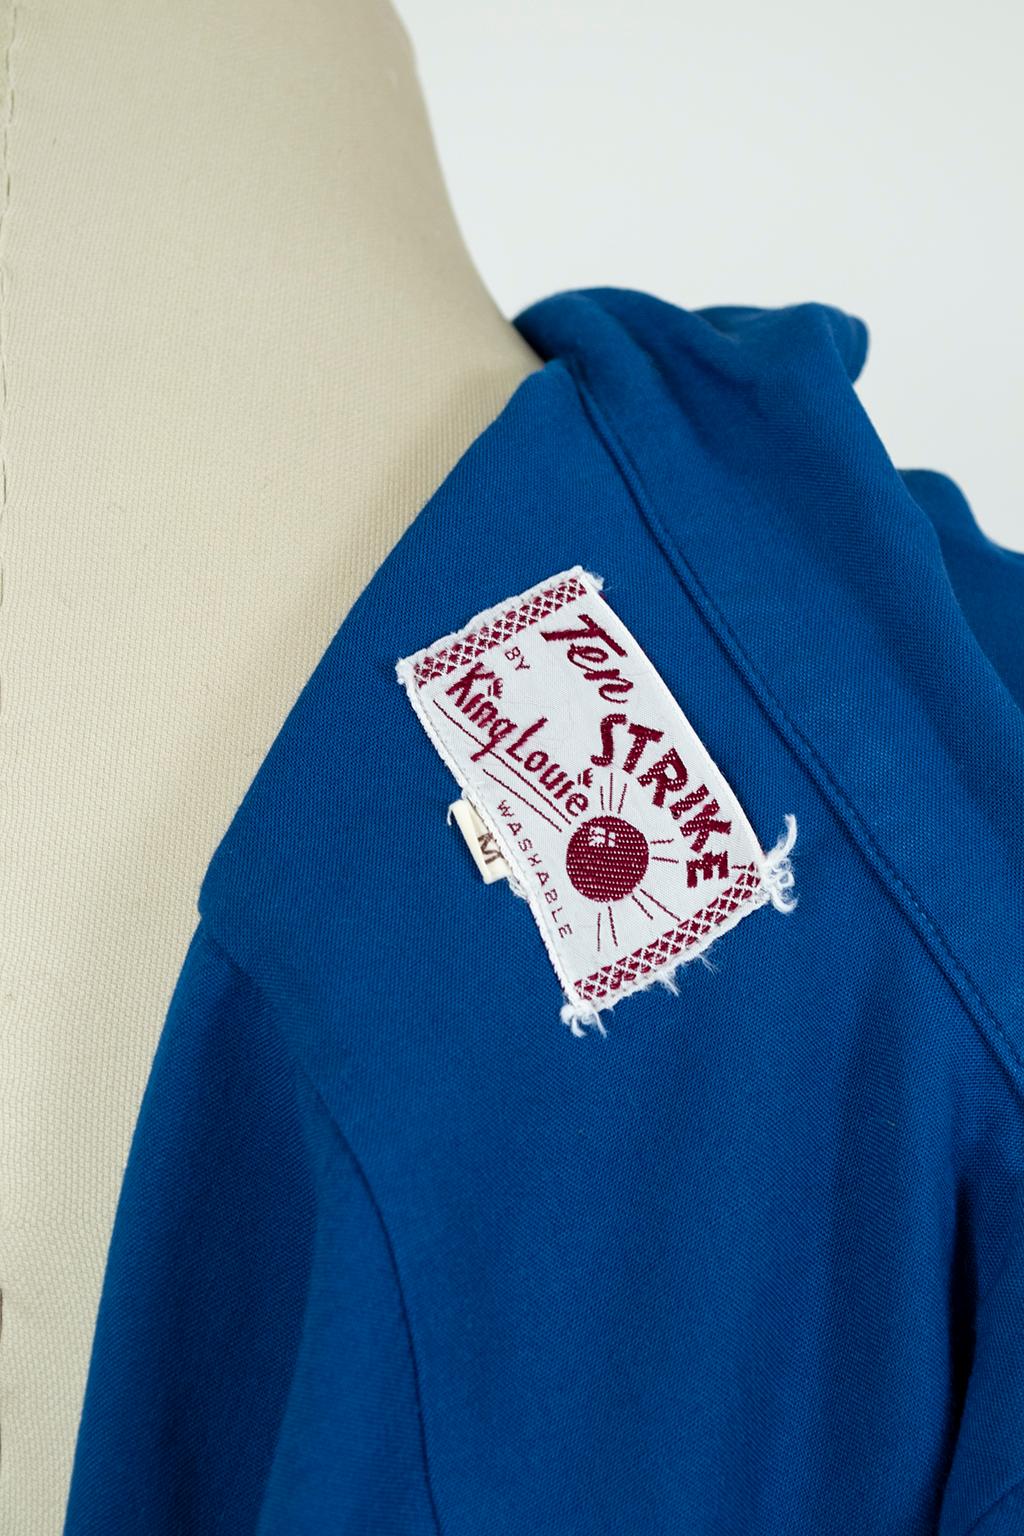 Men’s King Louie Ten Strike Royal Blue Bowling Shirt – Medium, 1950s For Sale 1